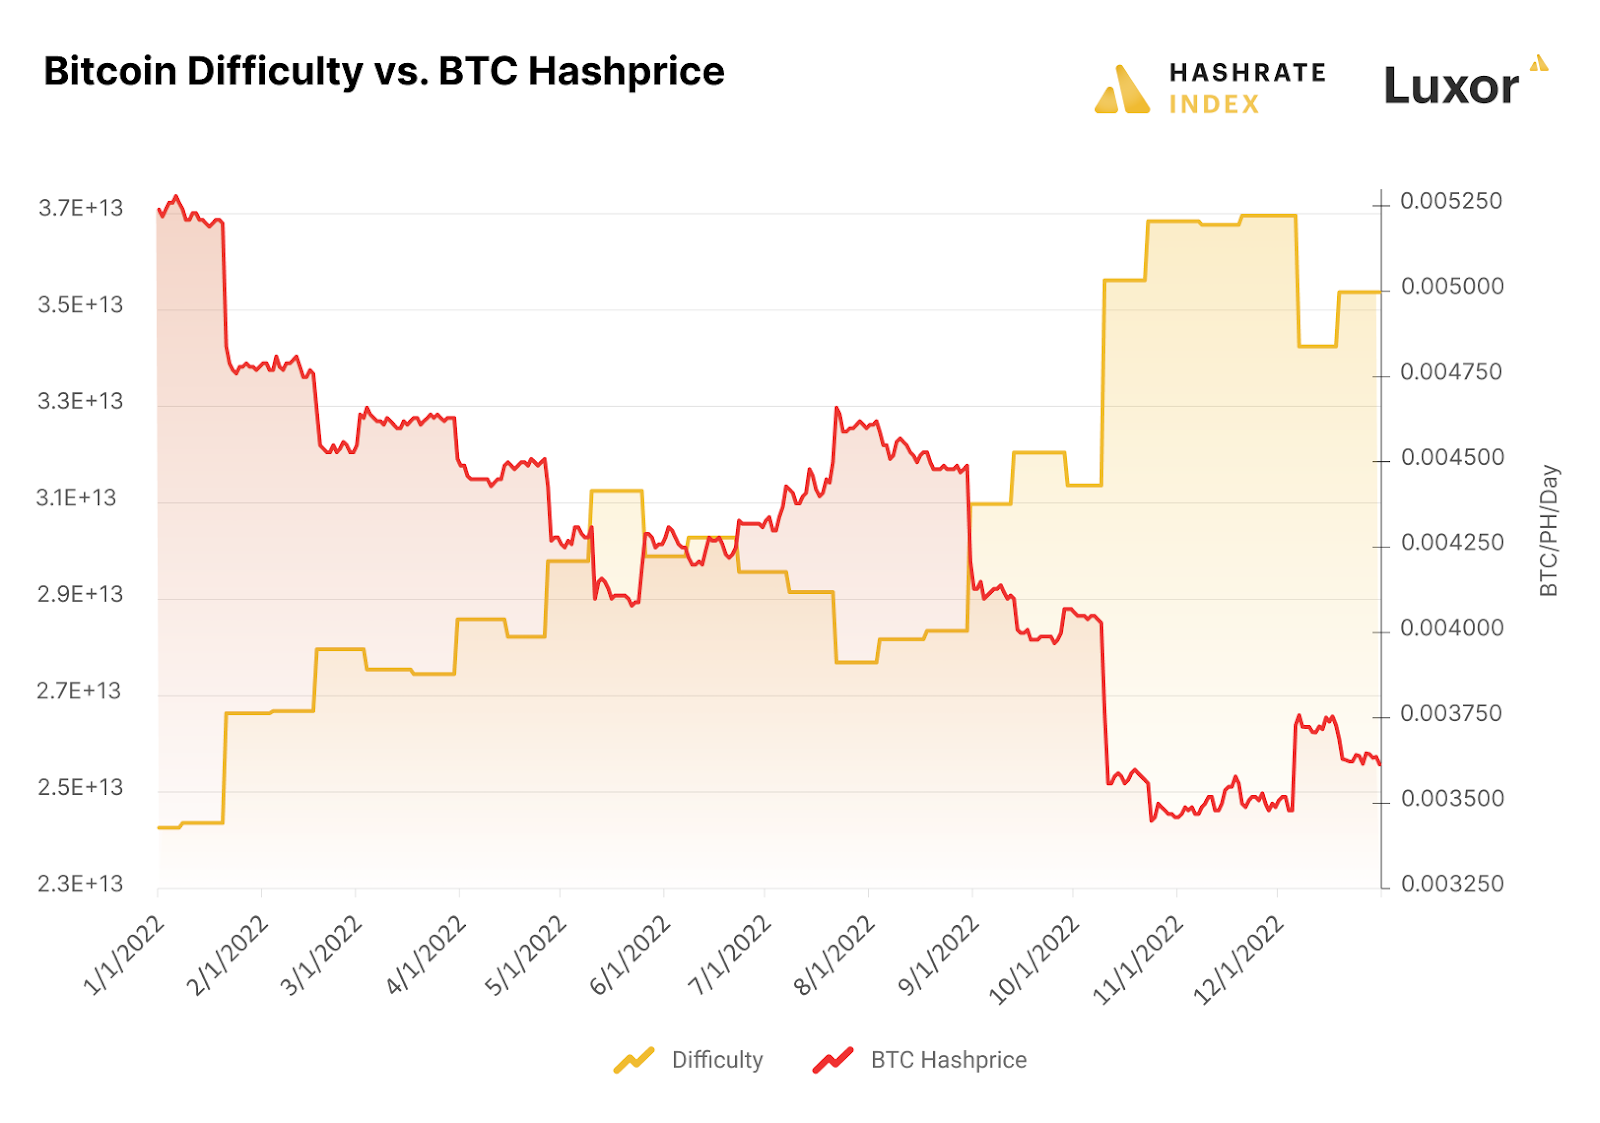 Bitcoin’s difficulty vs BTC-denominated hashprice | Source: Hashrate Index